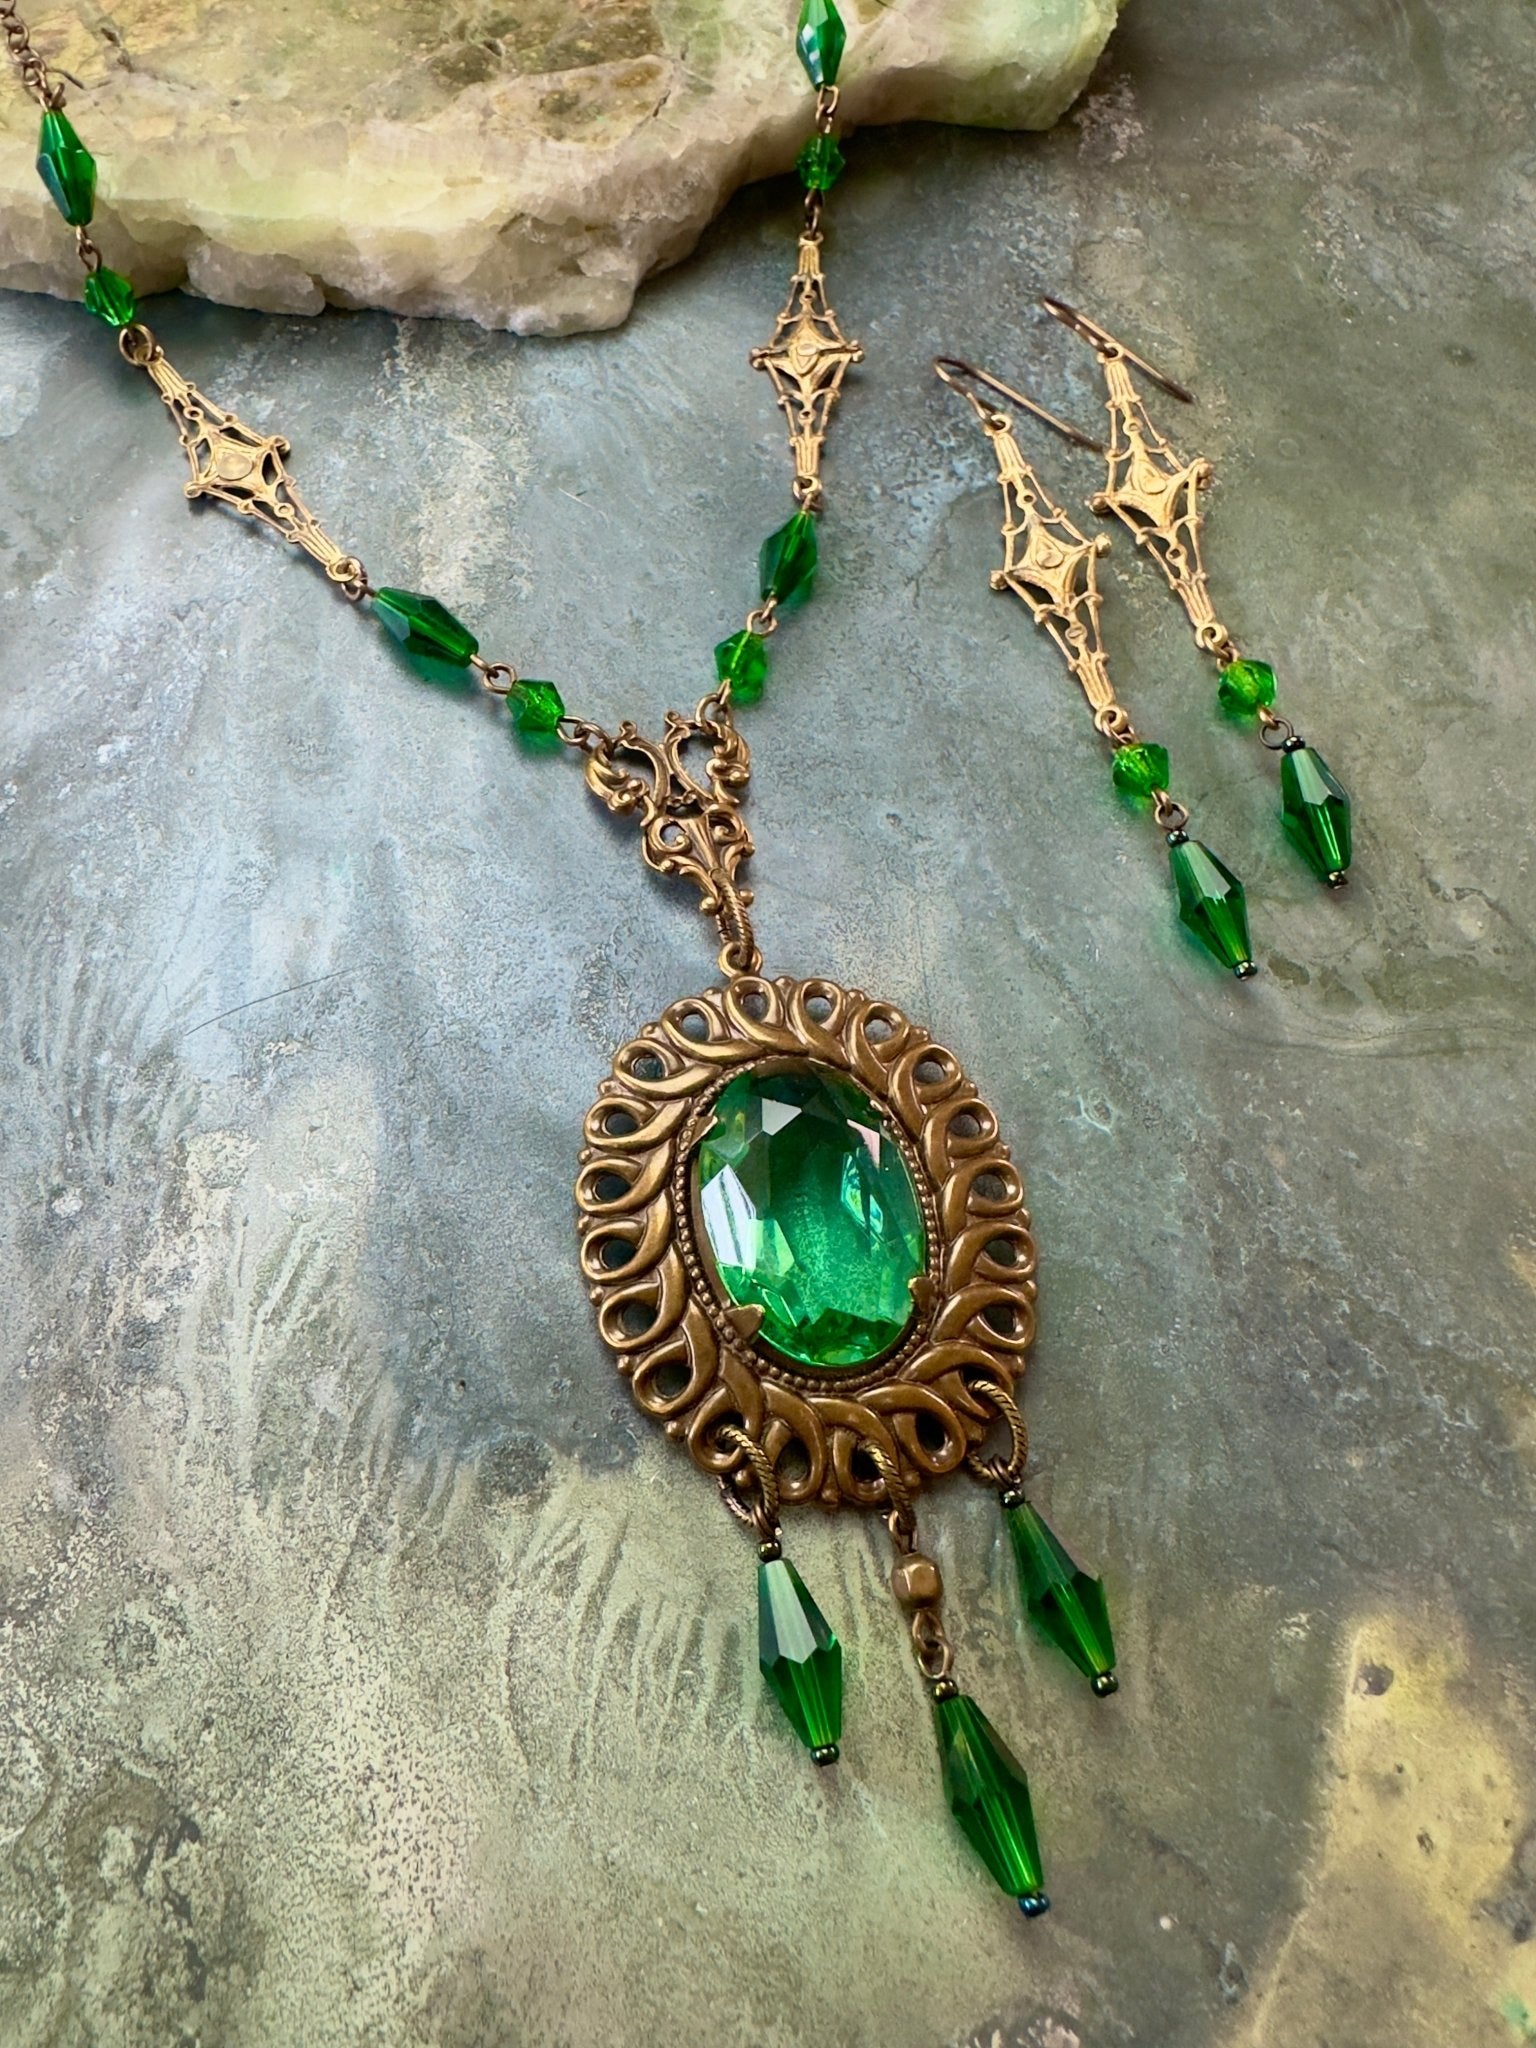 Venus Garden Complete Necklace & Earrings Kit - 5/3/24 - Vintaj Live Shop